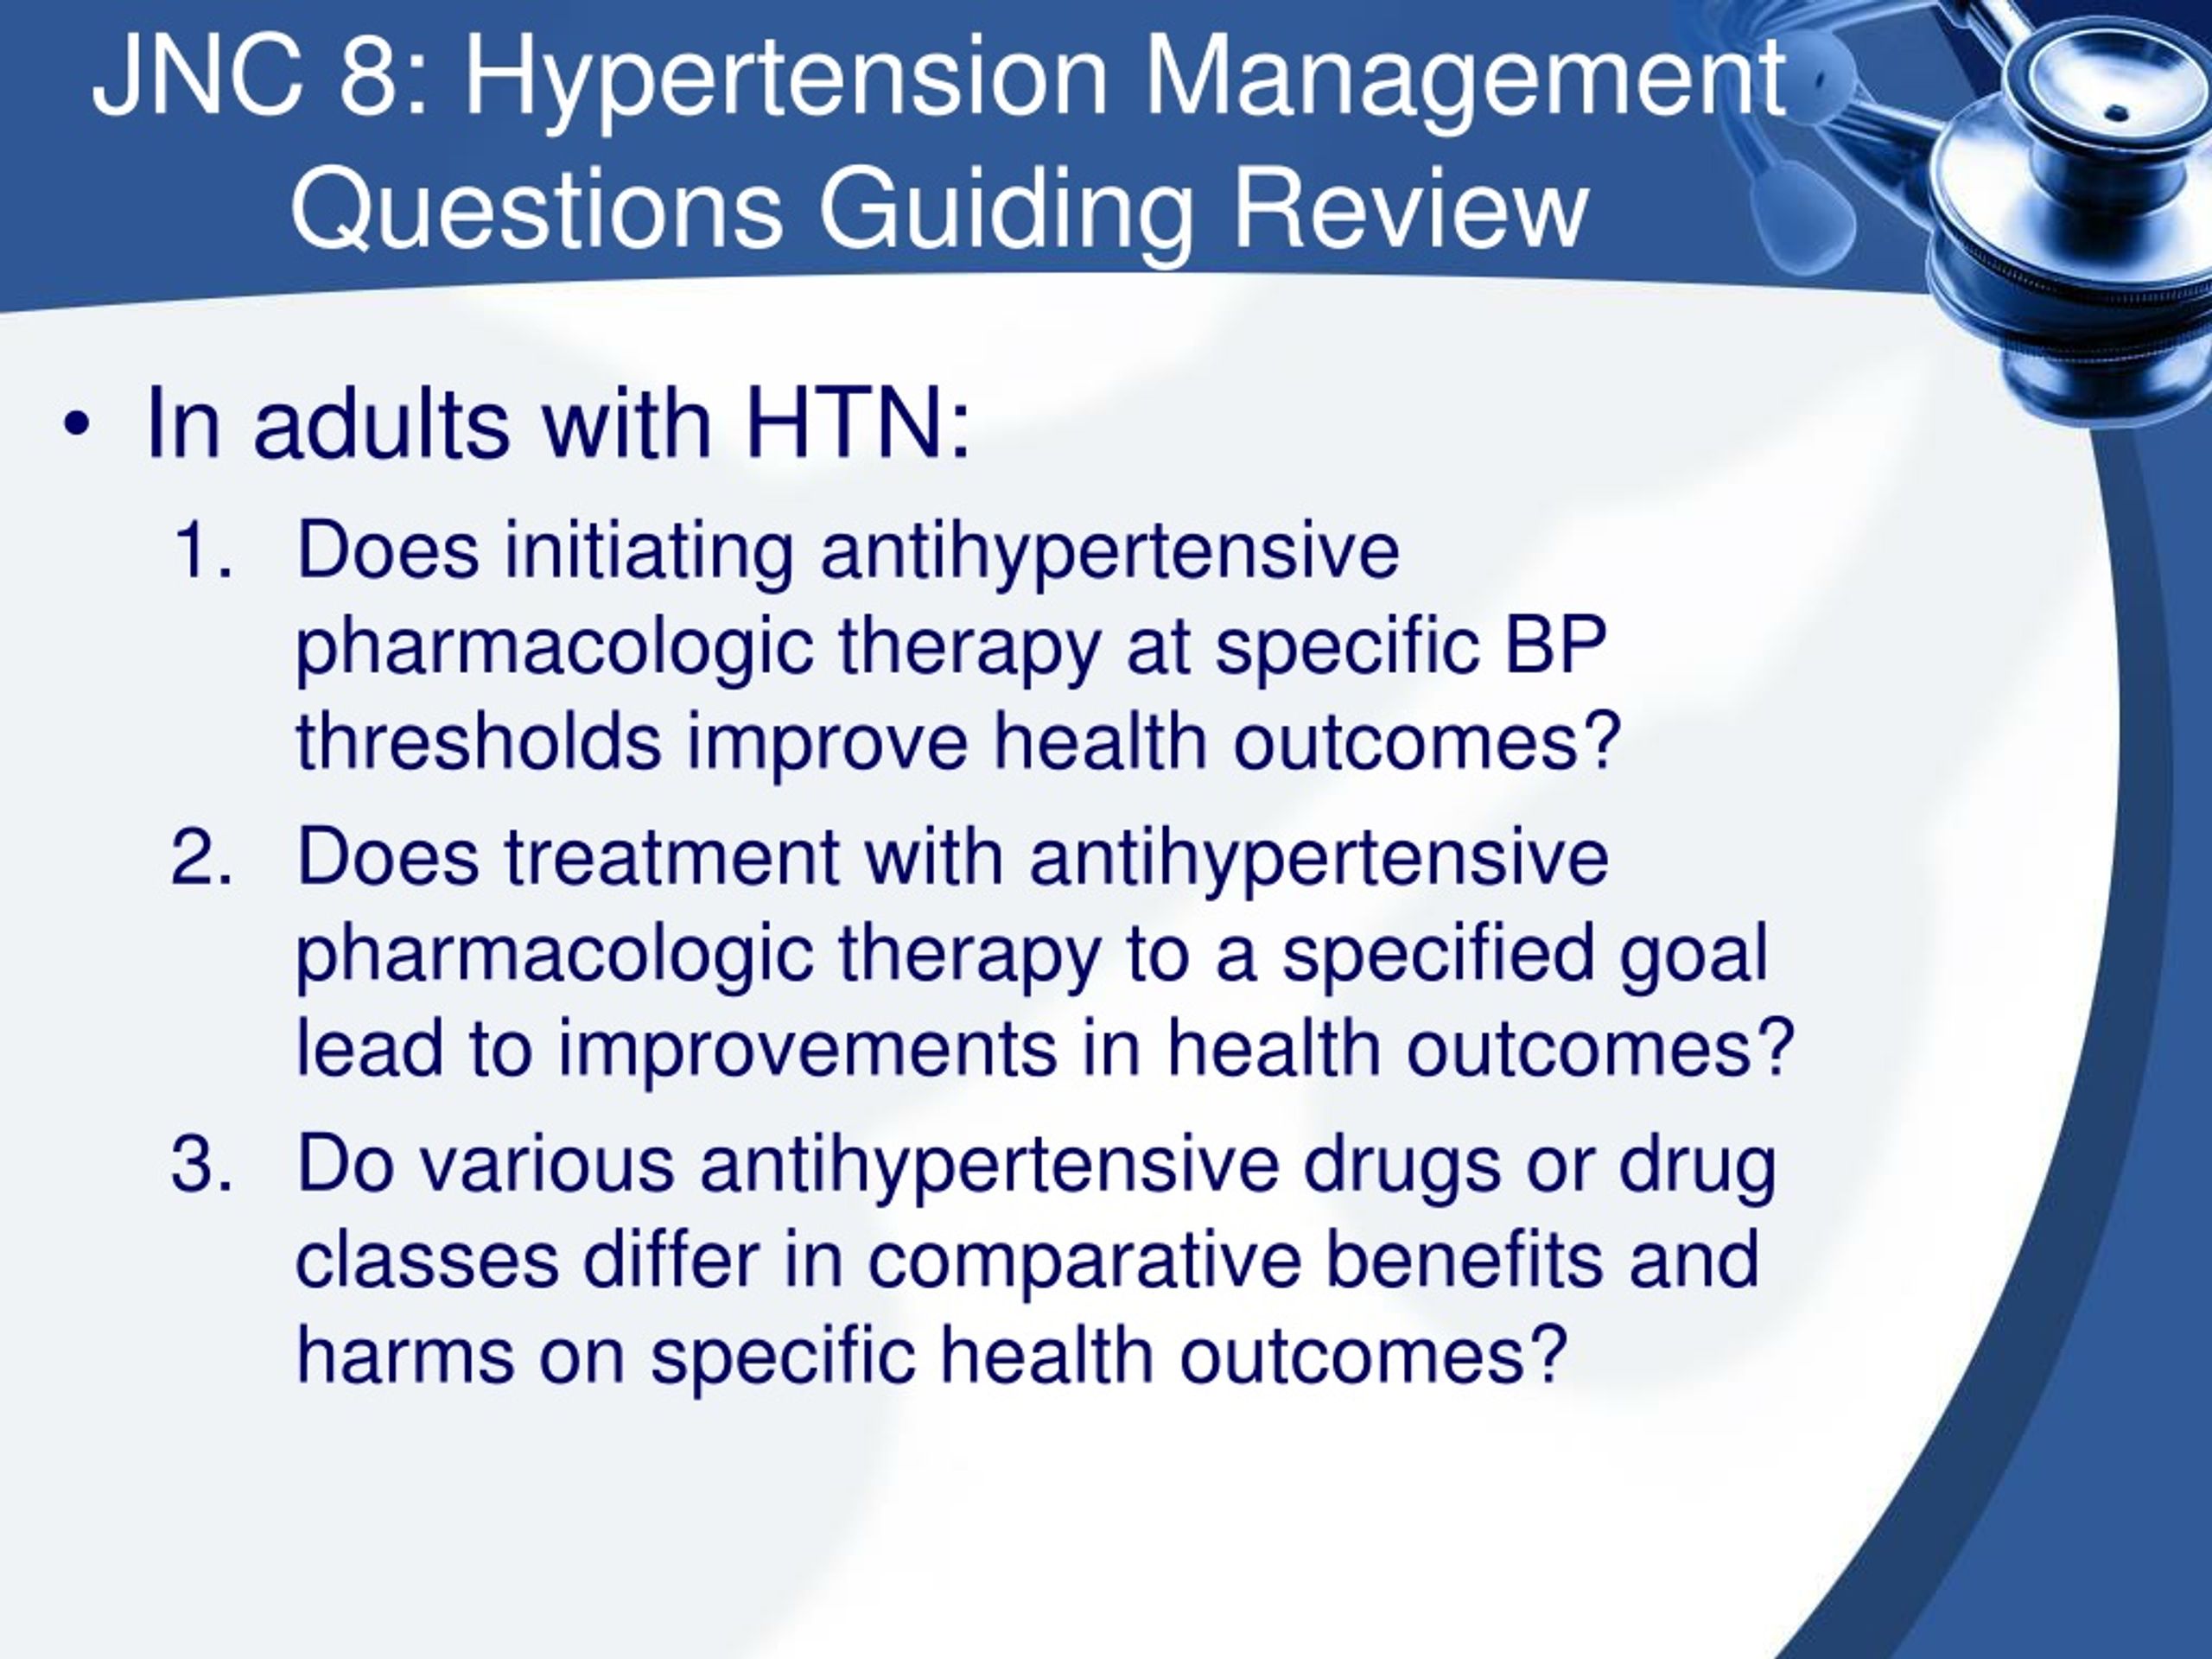 Ppt Hypertension Guidelines Jnc 8 Powerpoint Presentation Free